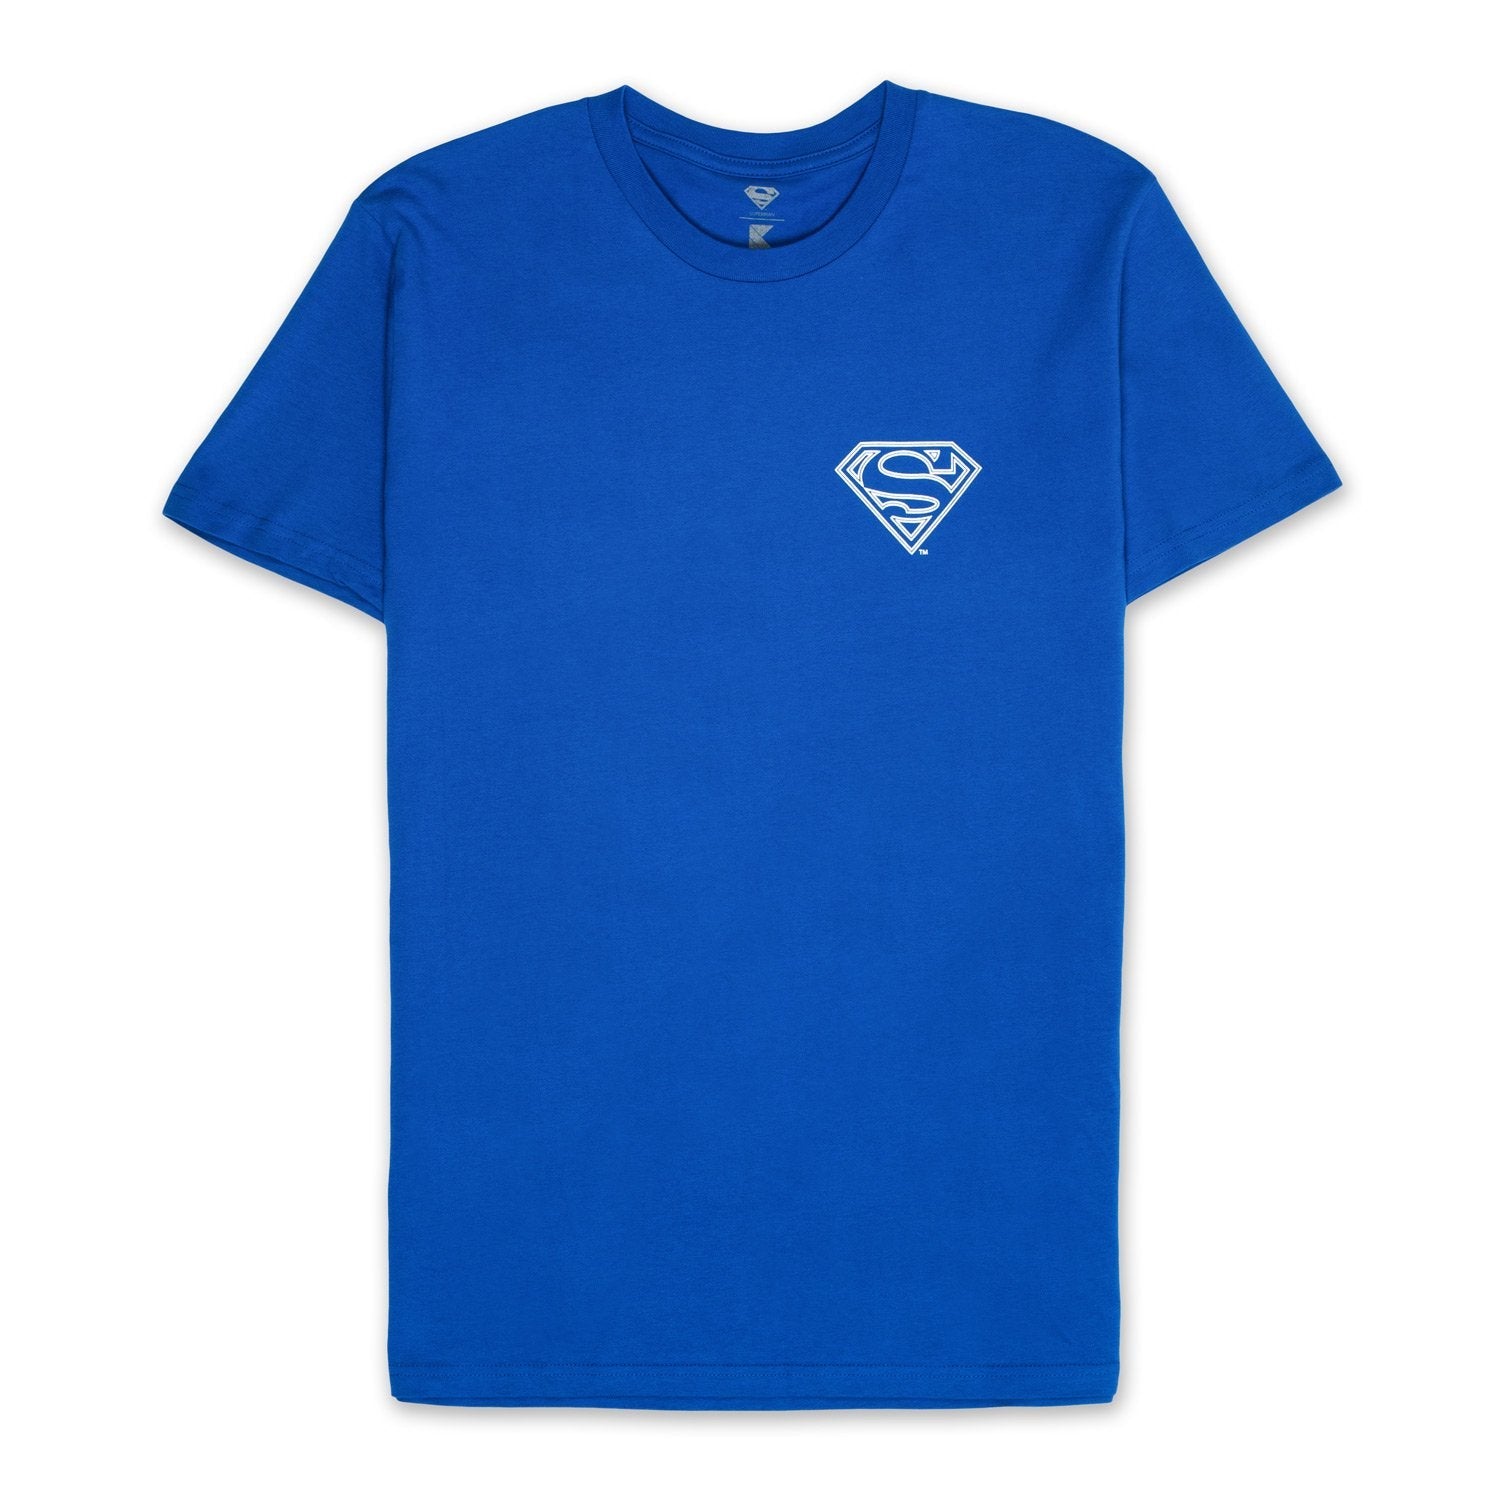 Kaskade x Superman Stacked Tee - Blue - Standard Tee -  Kaskade-  Electric Family Official Artist Merchandise